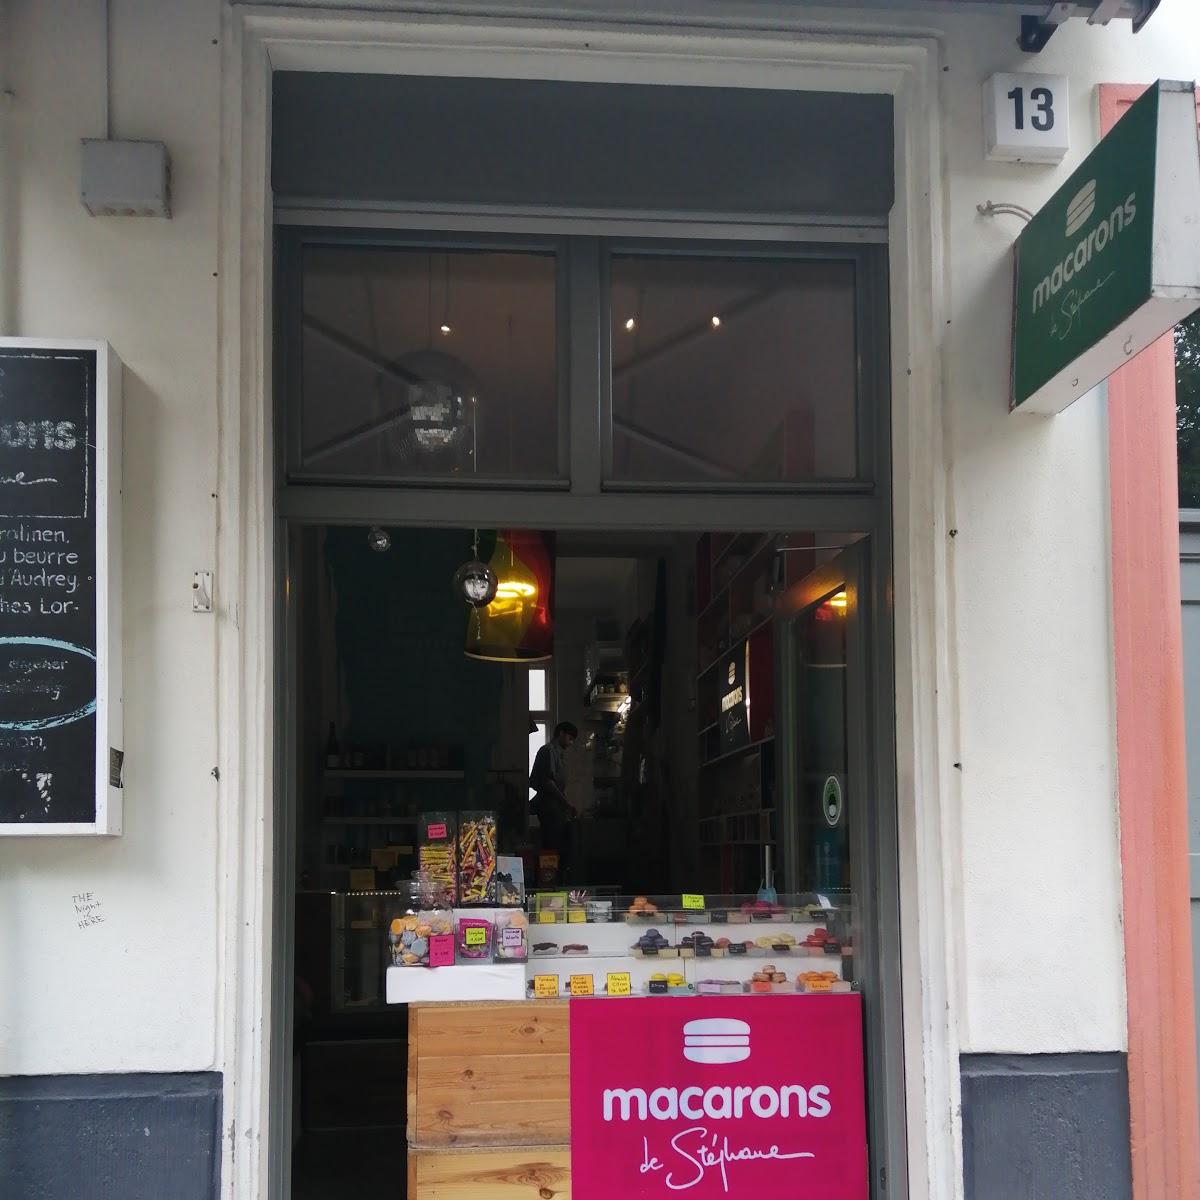 Restaurant "Macarons de Stéphane" in Berlin